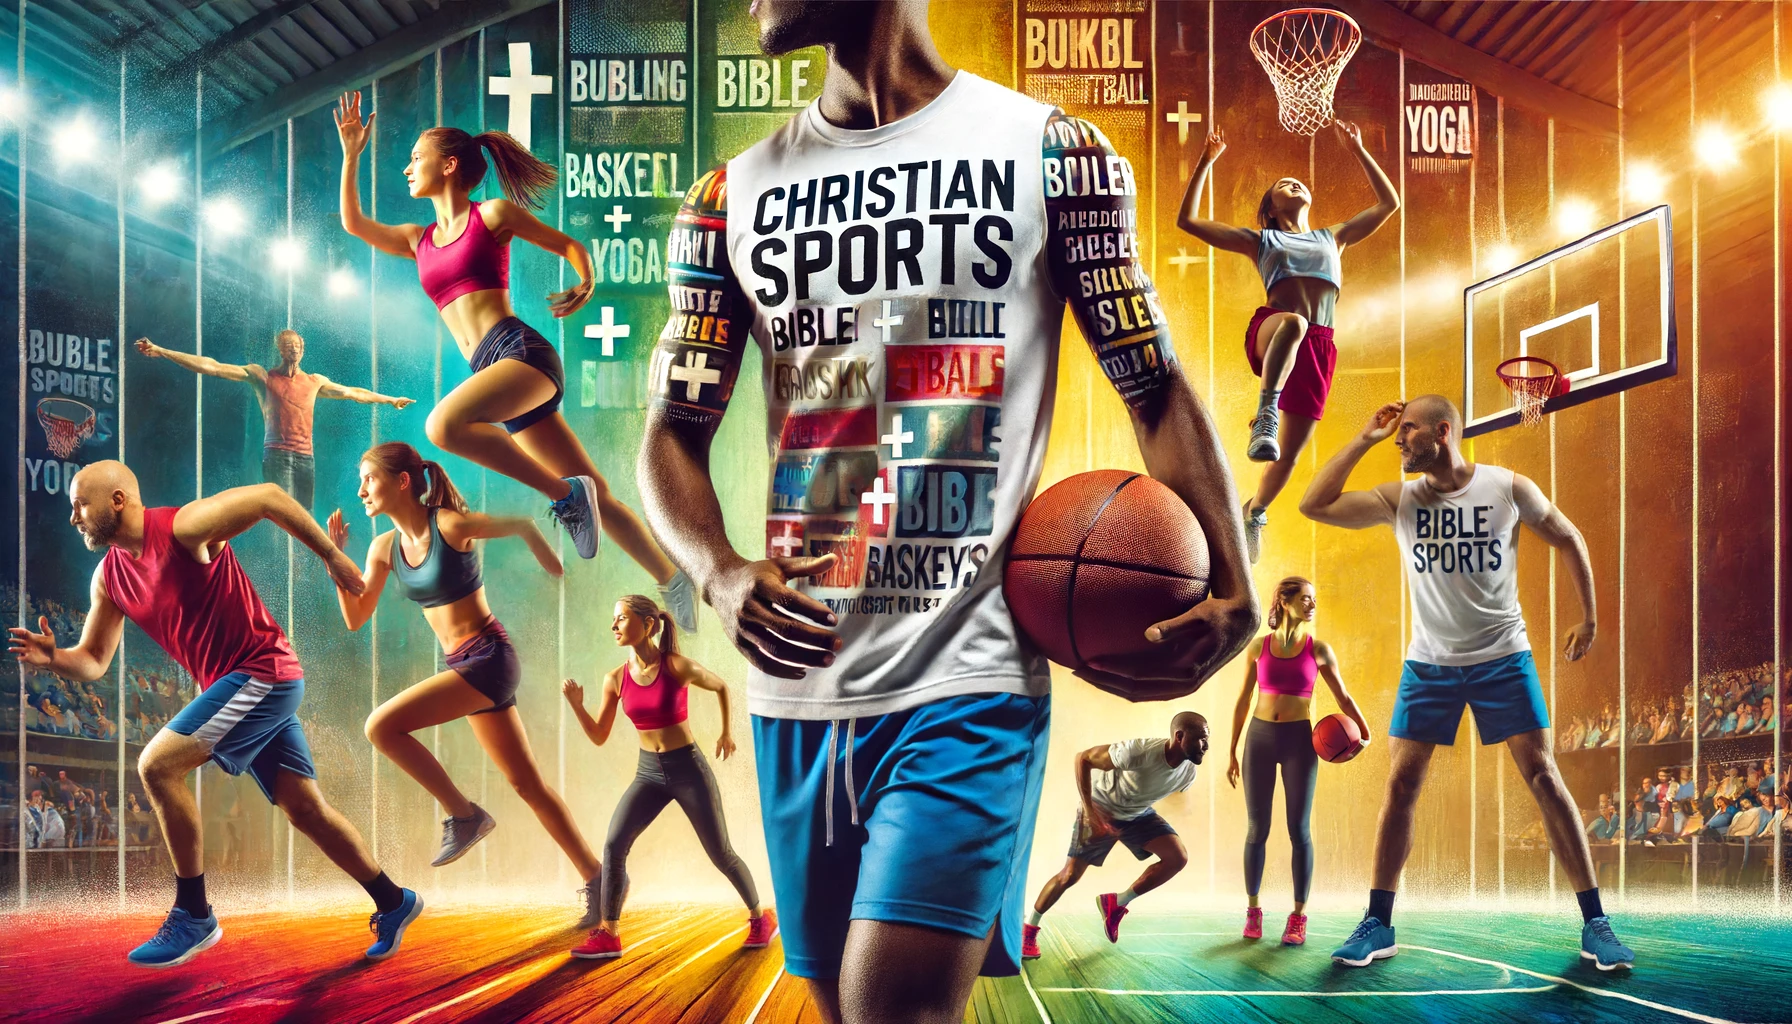 Christian sports gear